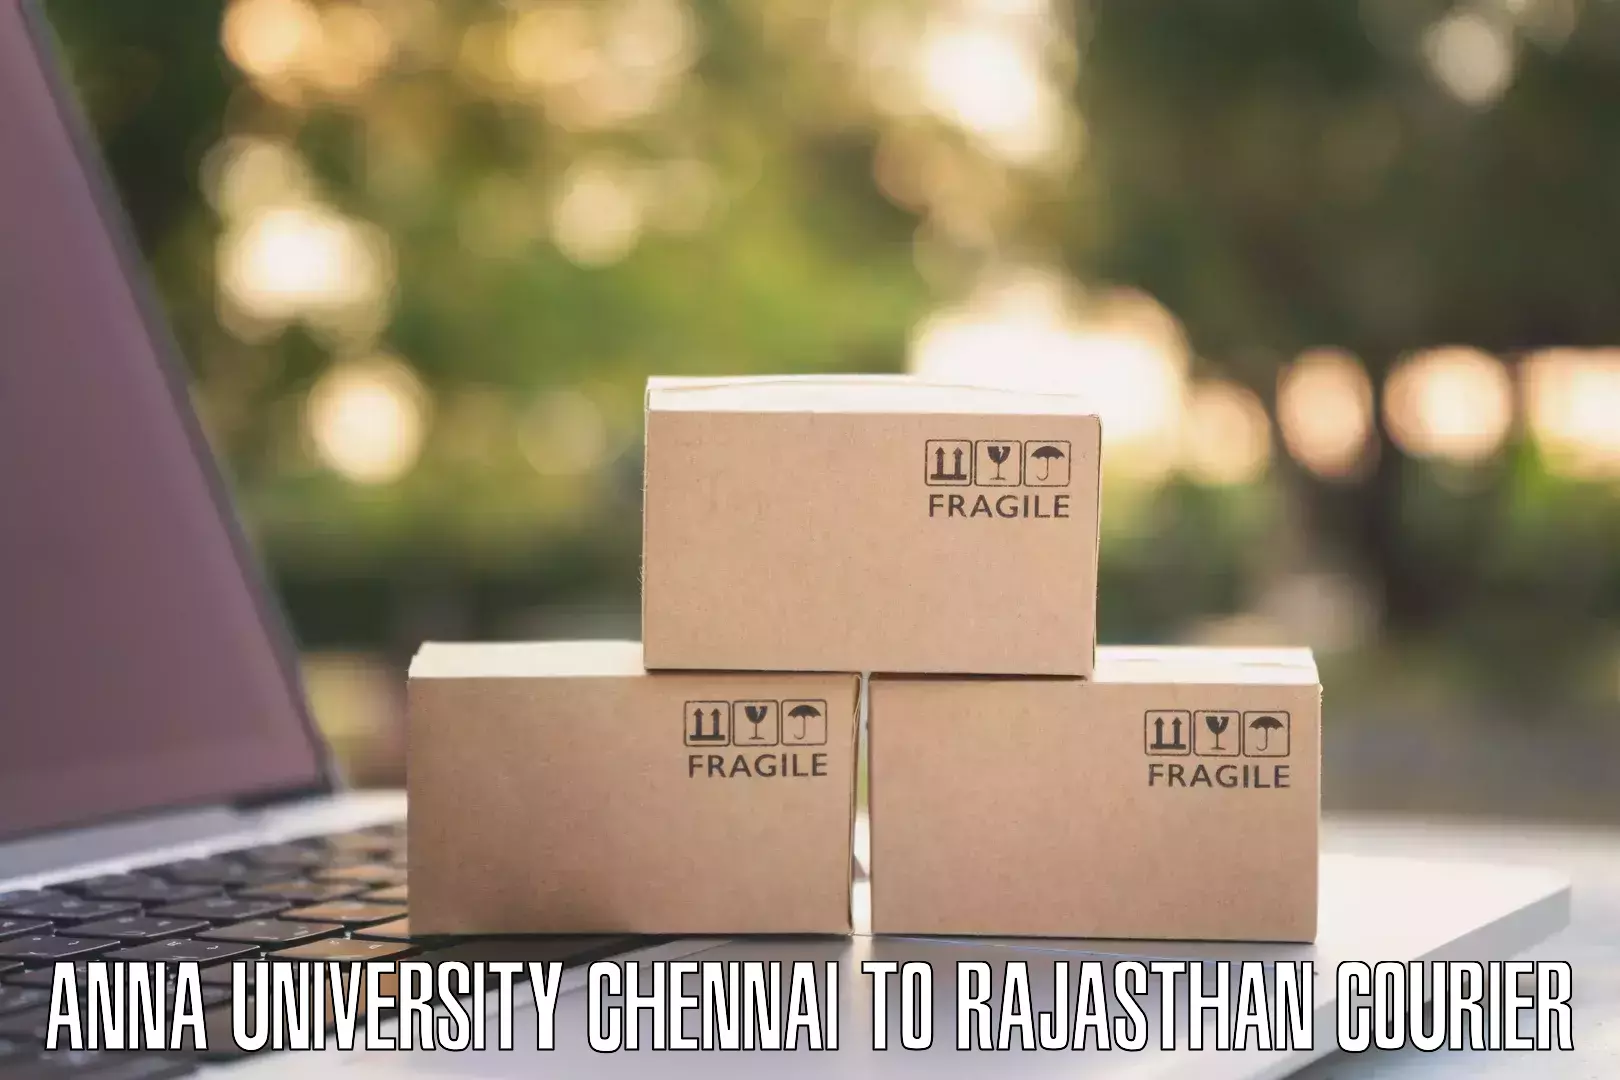 Courier service partnerships in Anna University Chennai to Tarnau